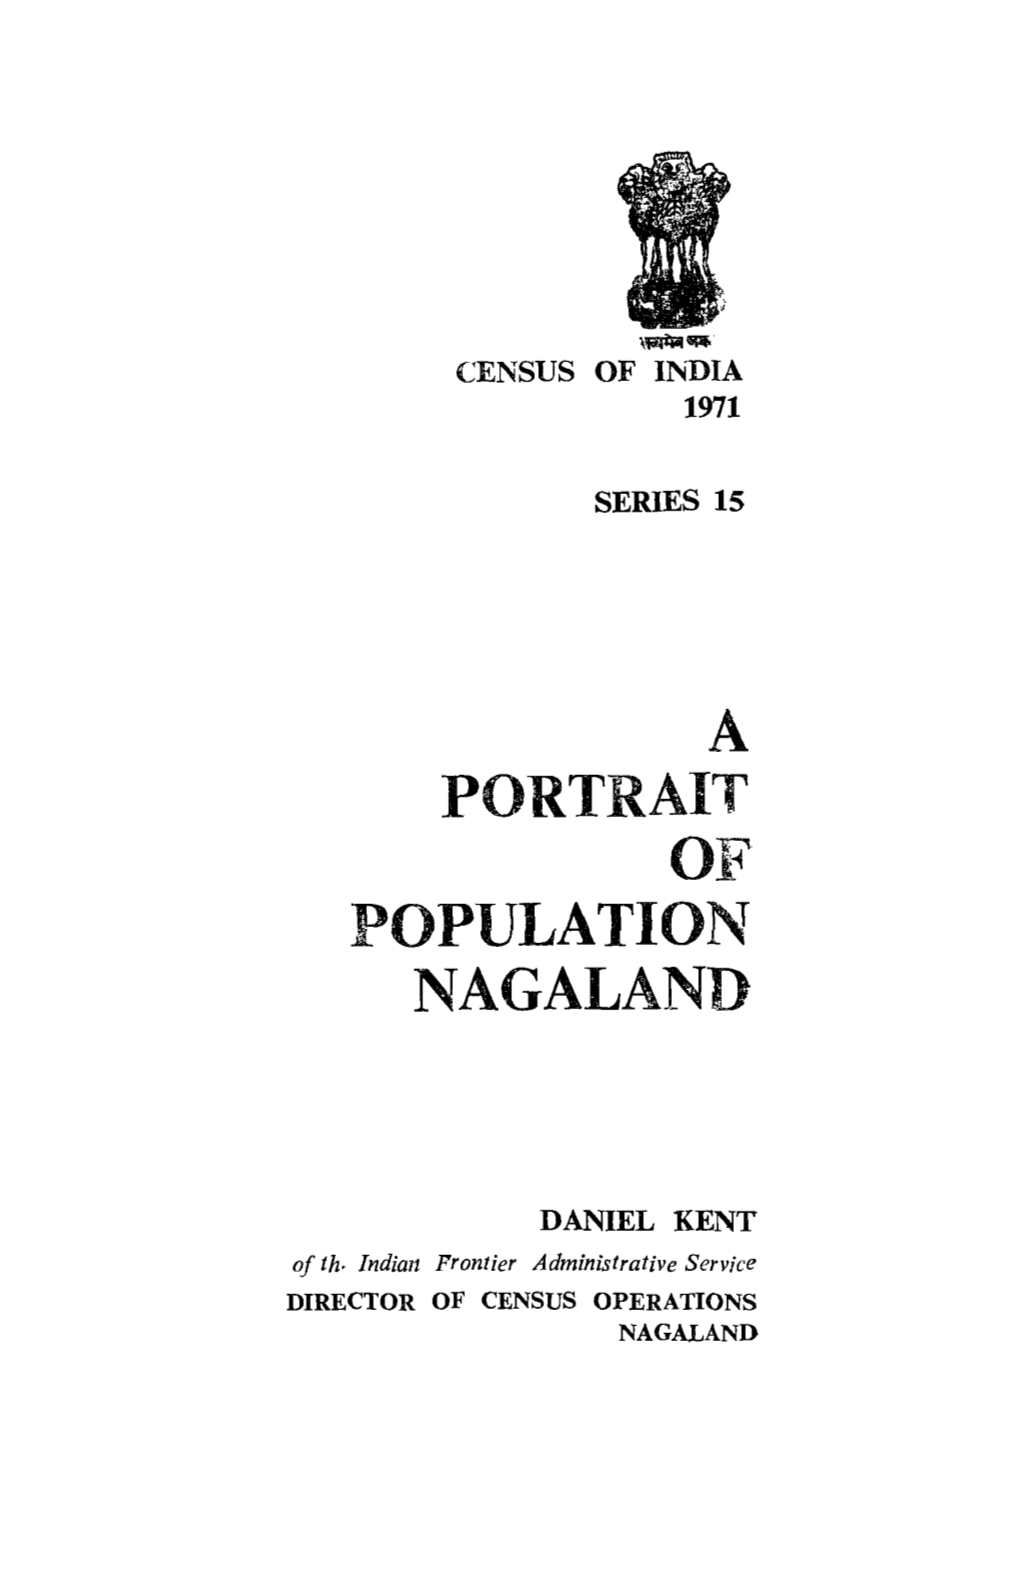 Portrait of Population Nagaland, Series-15, Nagaland